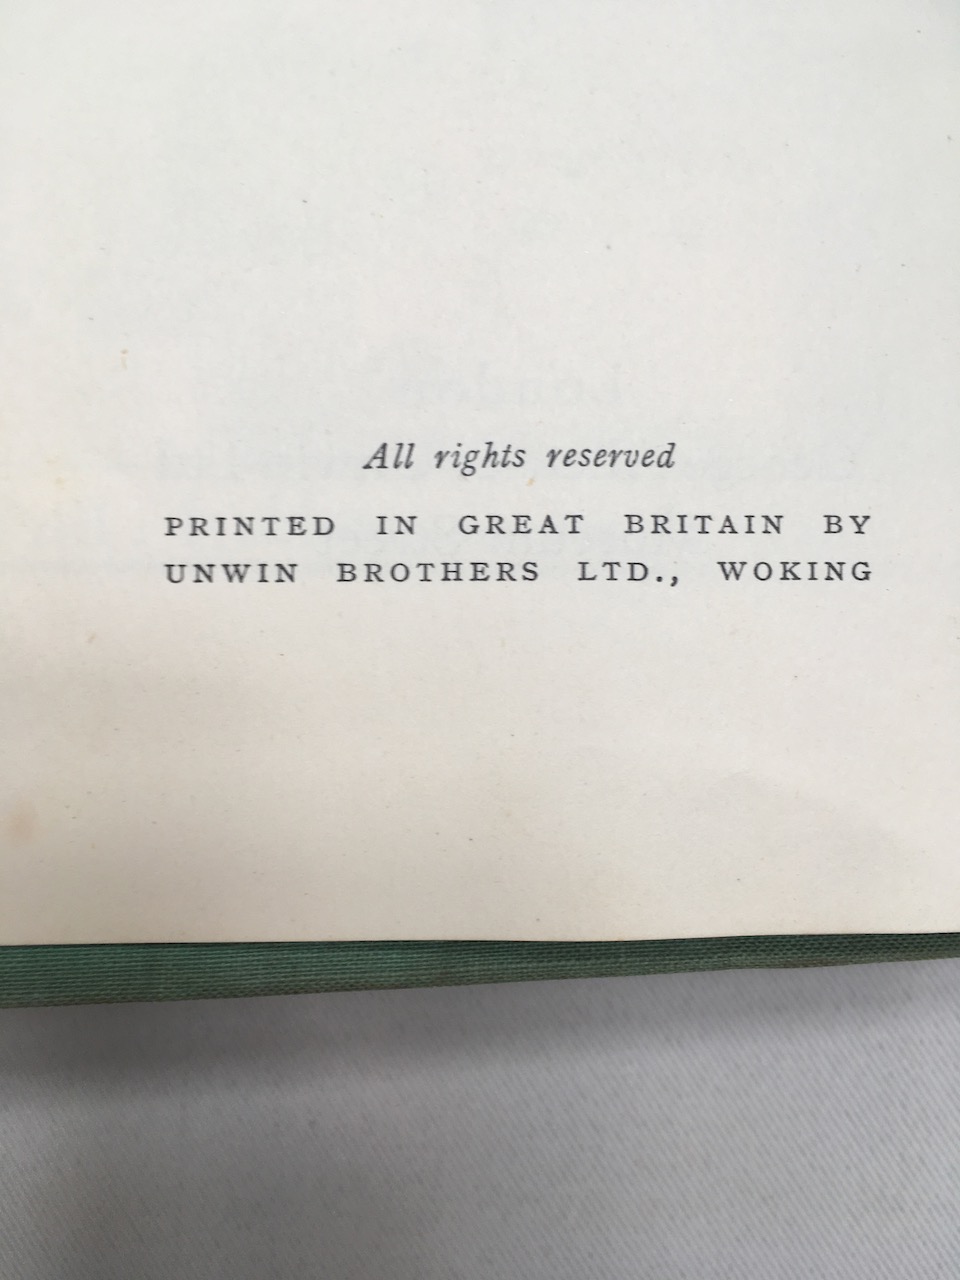 
The Hobbit, George Allen & Unwin, 1937 1st UK Edition 2nd impression 14